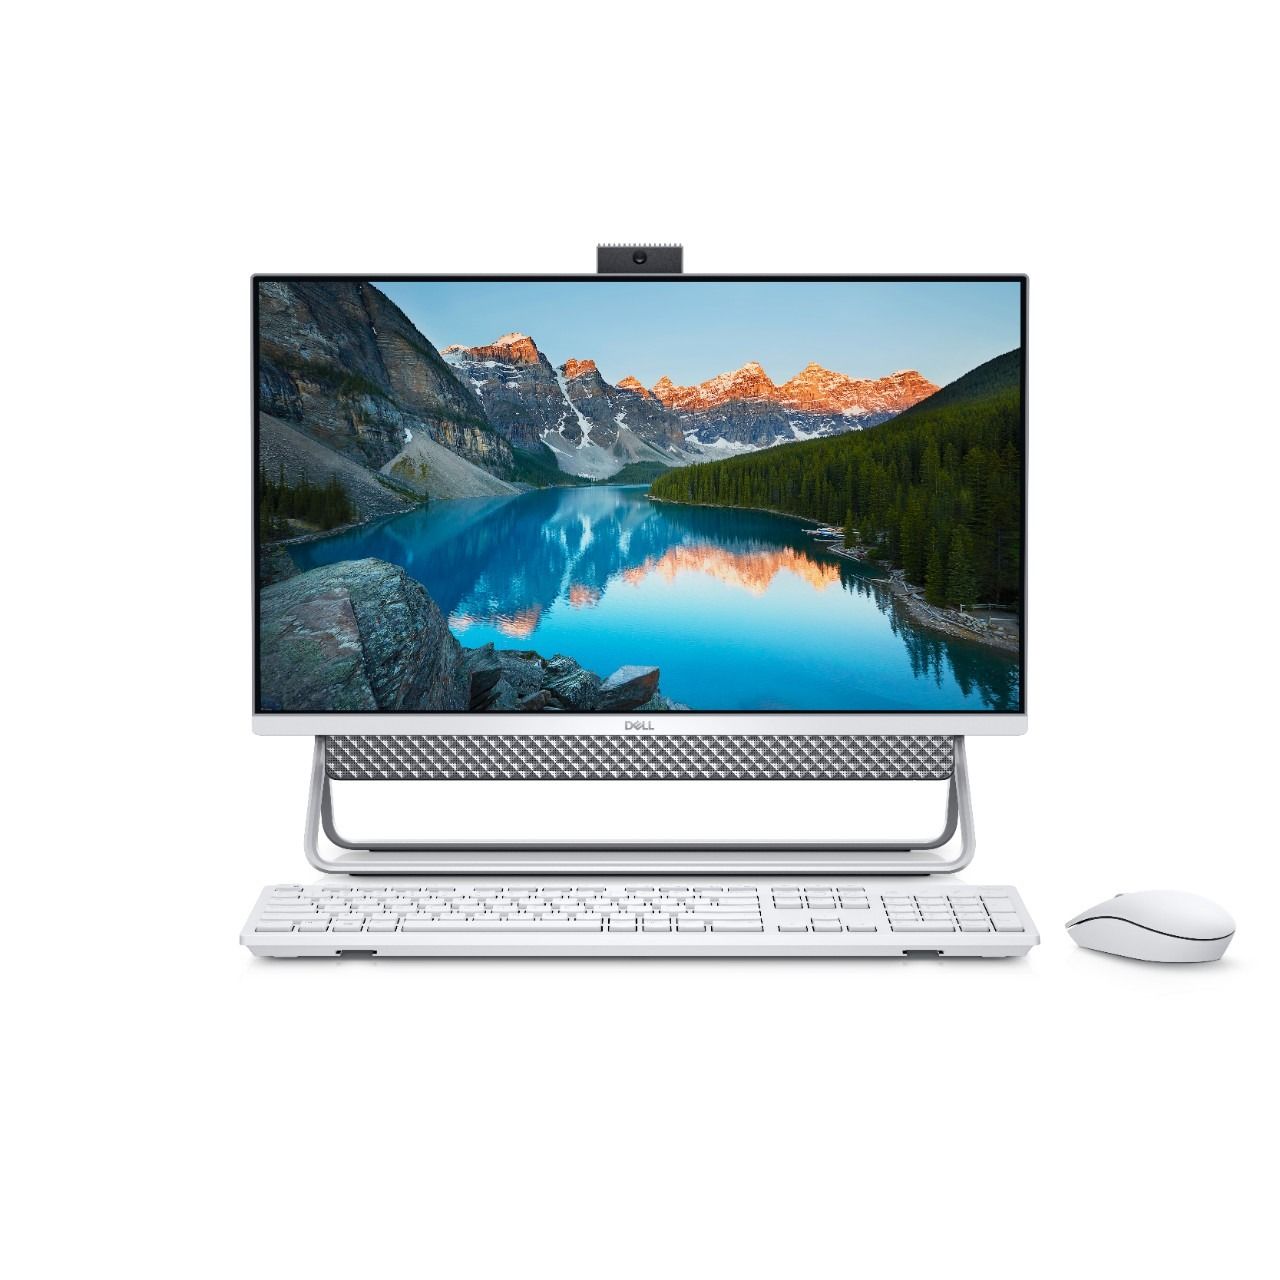 Dell Inspiron 5000 i7 16GB, 1TB+ 256GB 2GB NVIDIA GeForce MX110 Graphic All-in-One Desktop